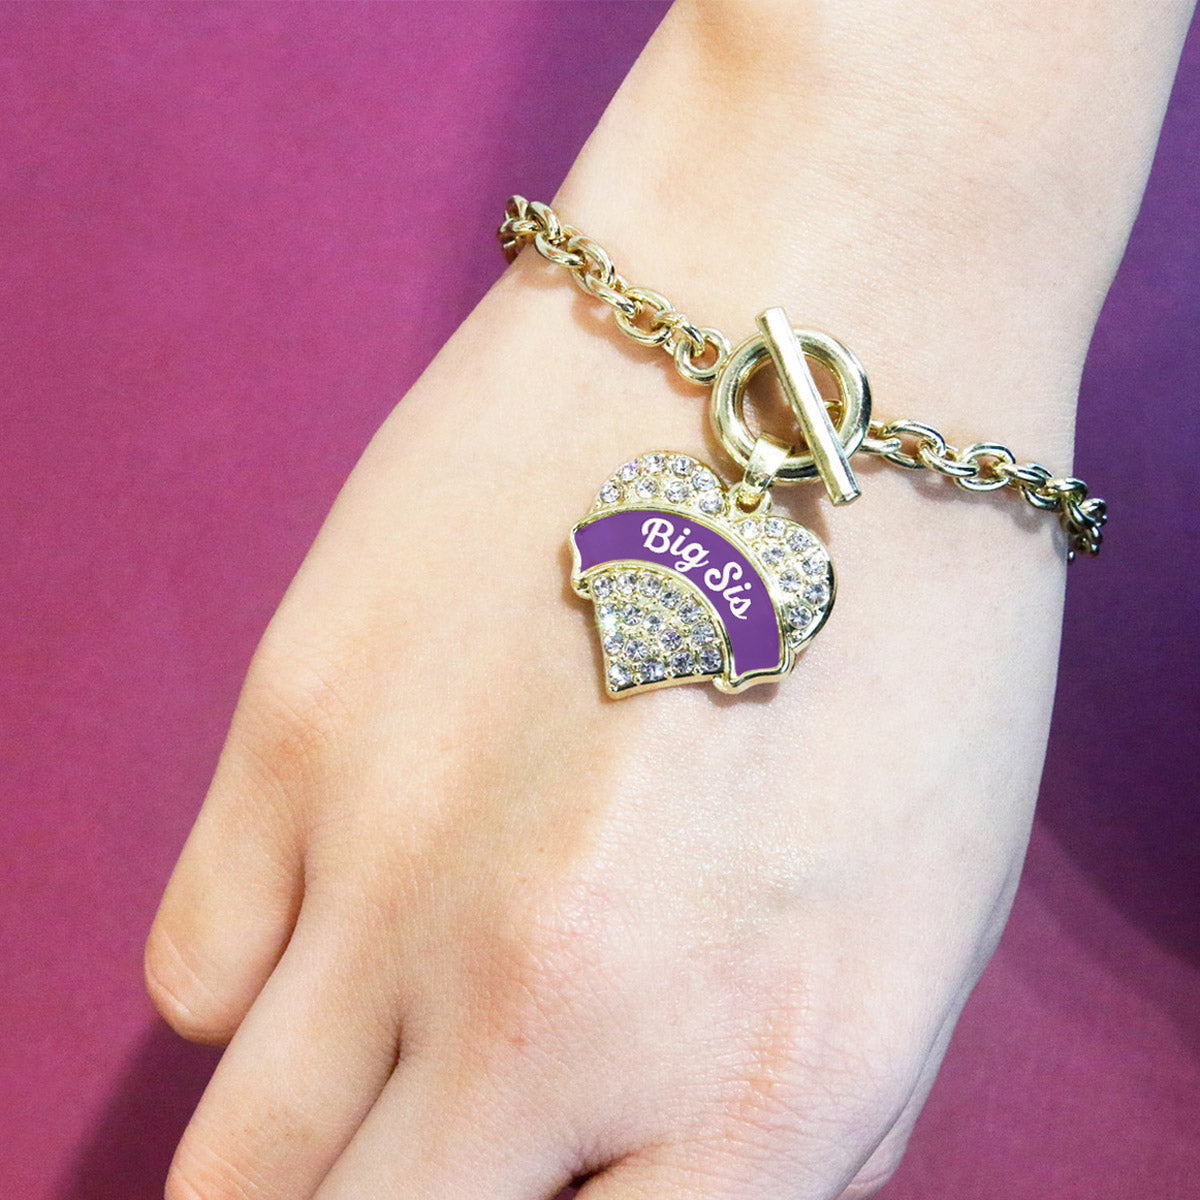 Gold Purple Big Sister Pave Heart Charm Toggle Bracelet